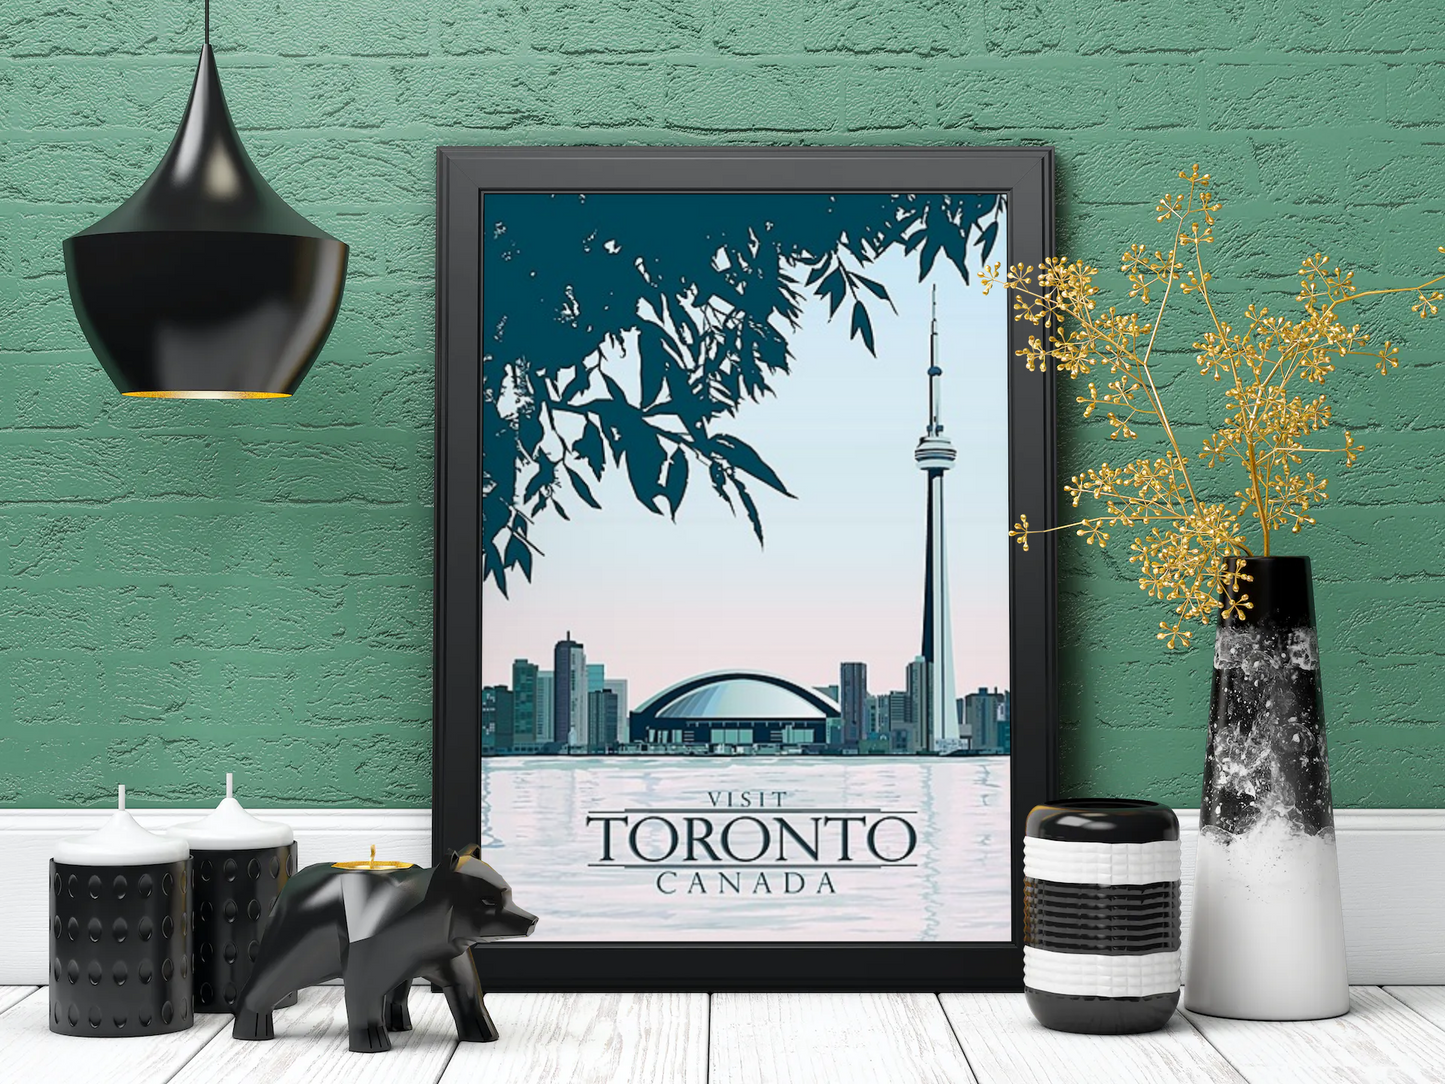 Vintage Toronto Tower Travel Art Painting